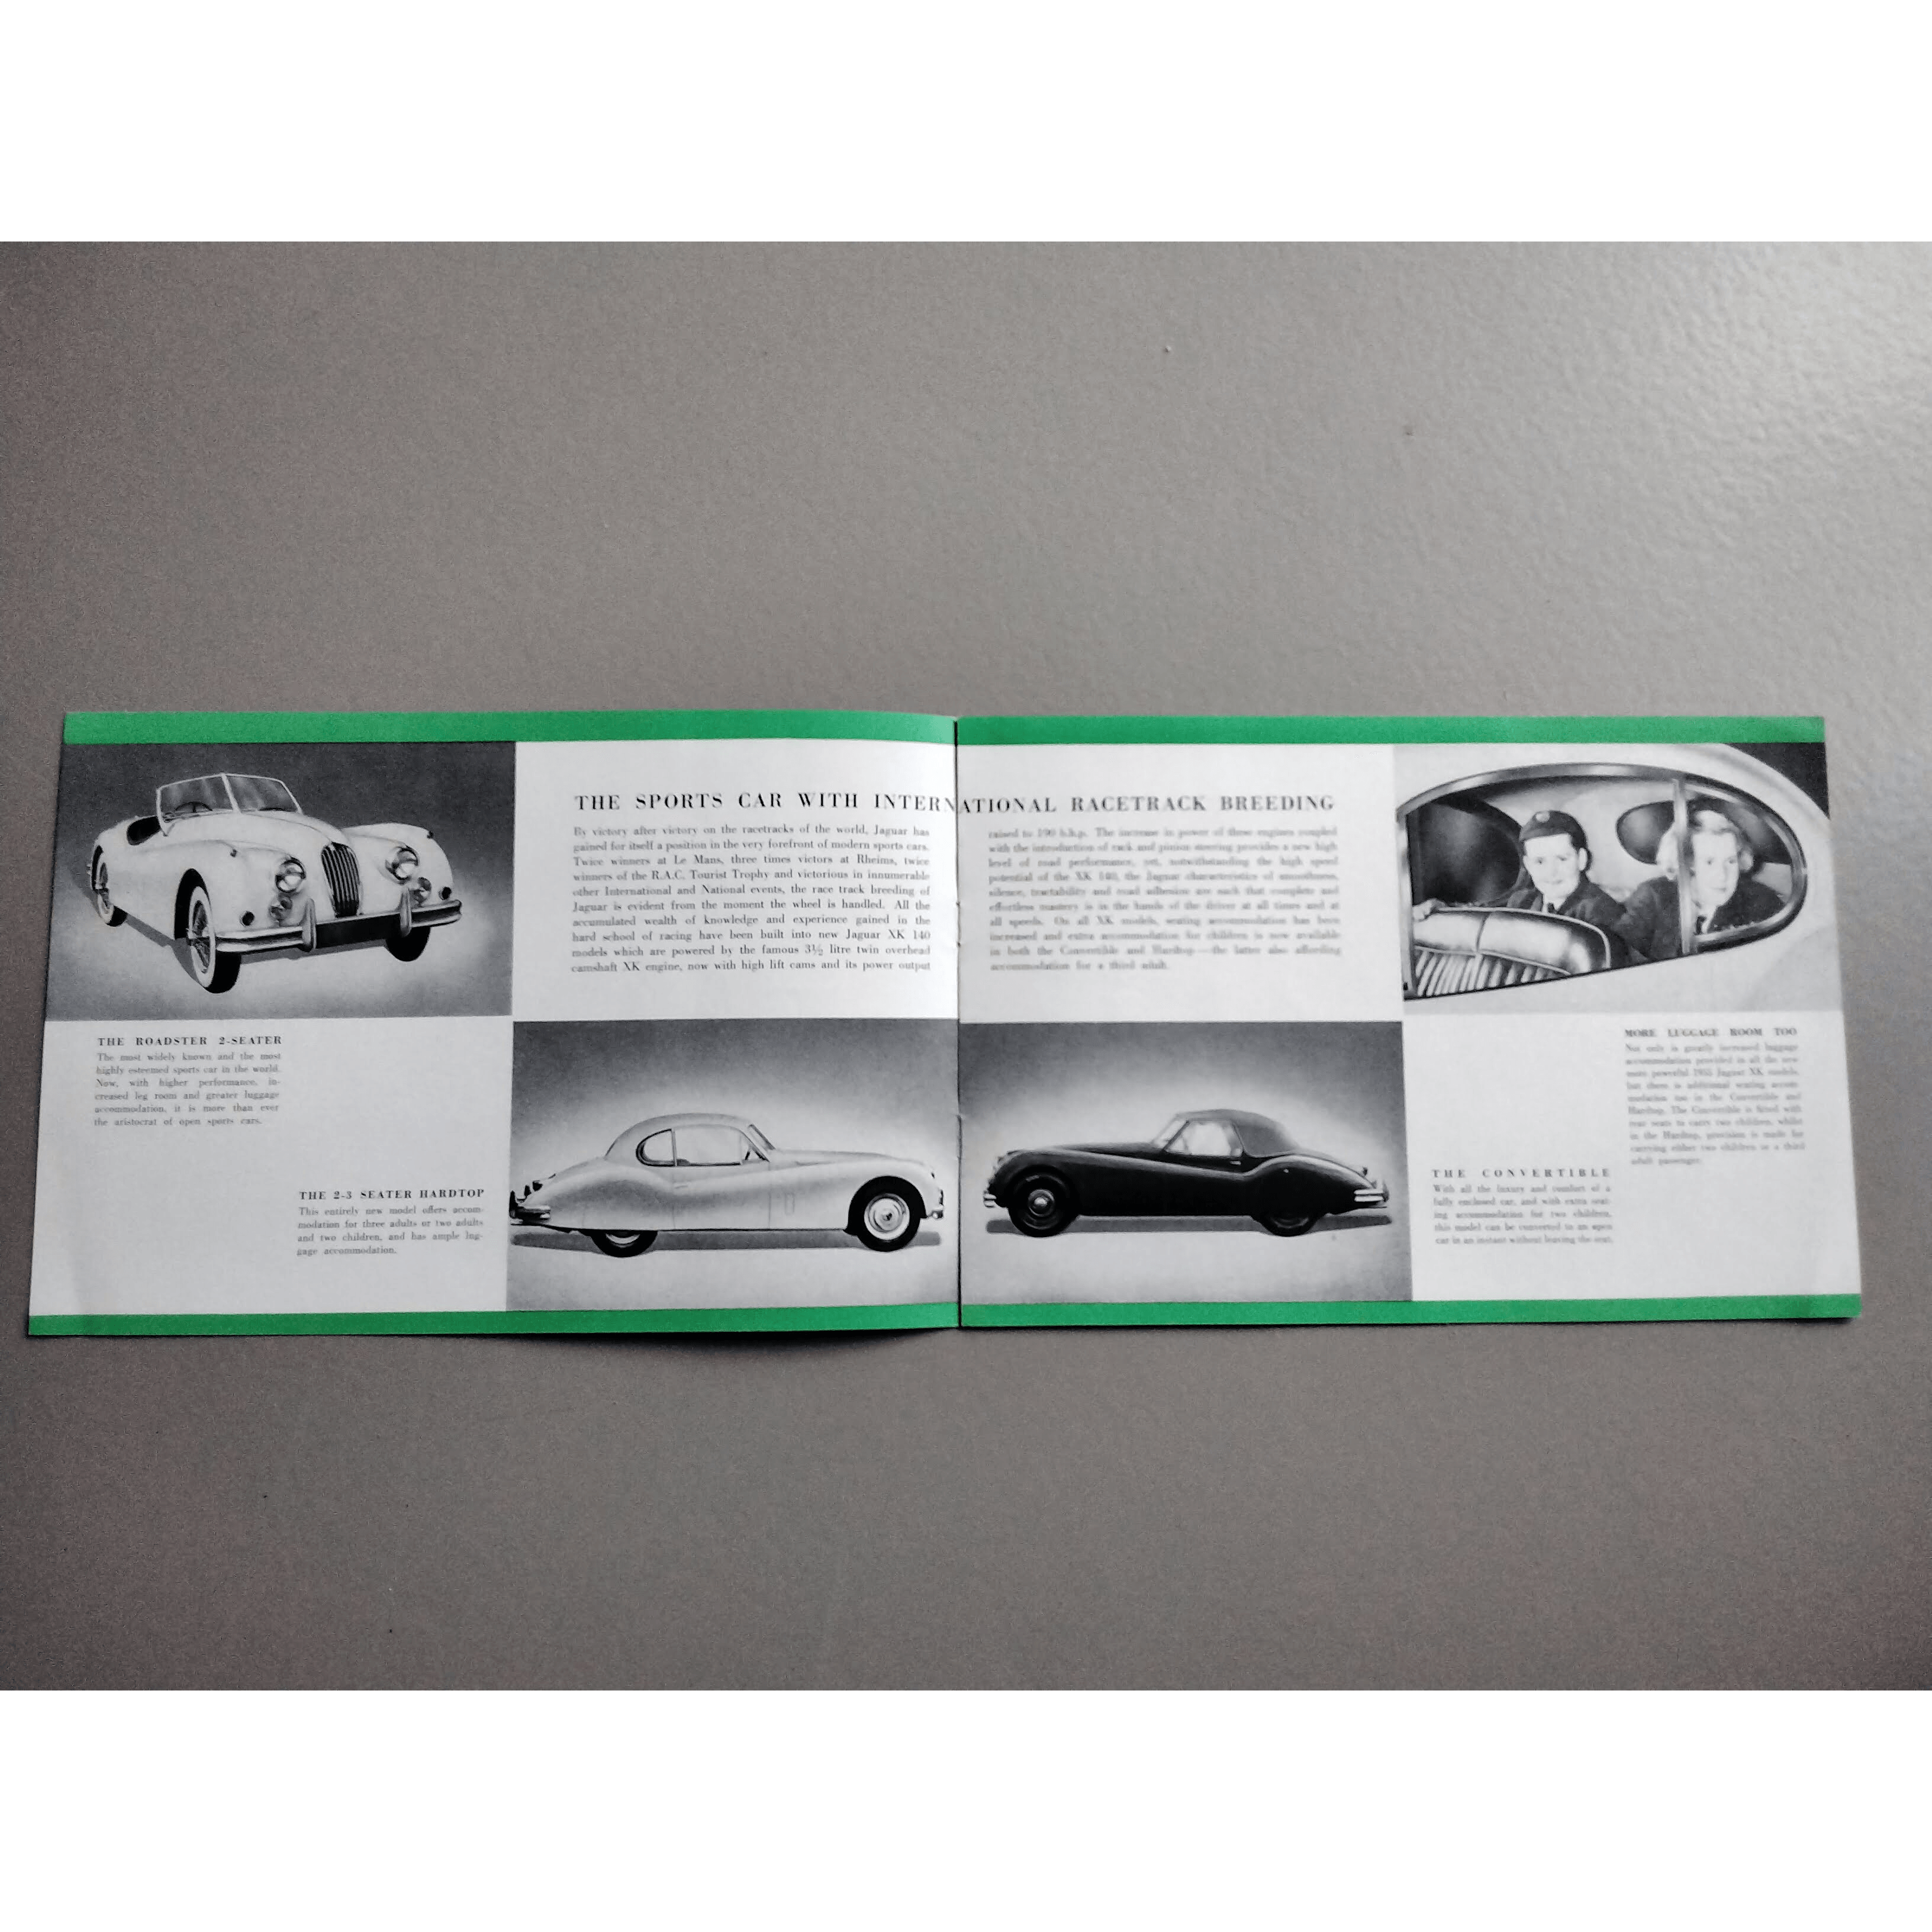 The new 1955 Jaguar Folder - Berry Smink British Car Parts